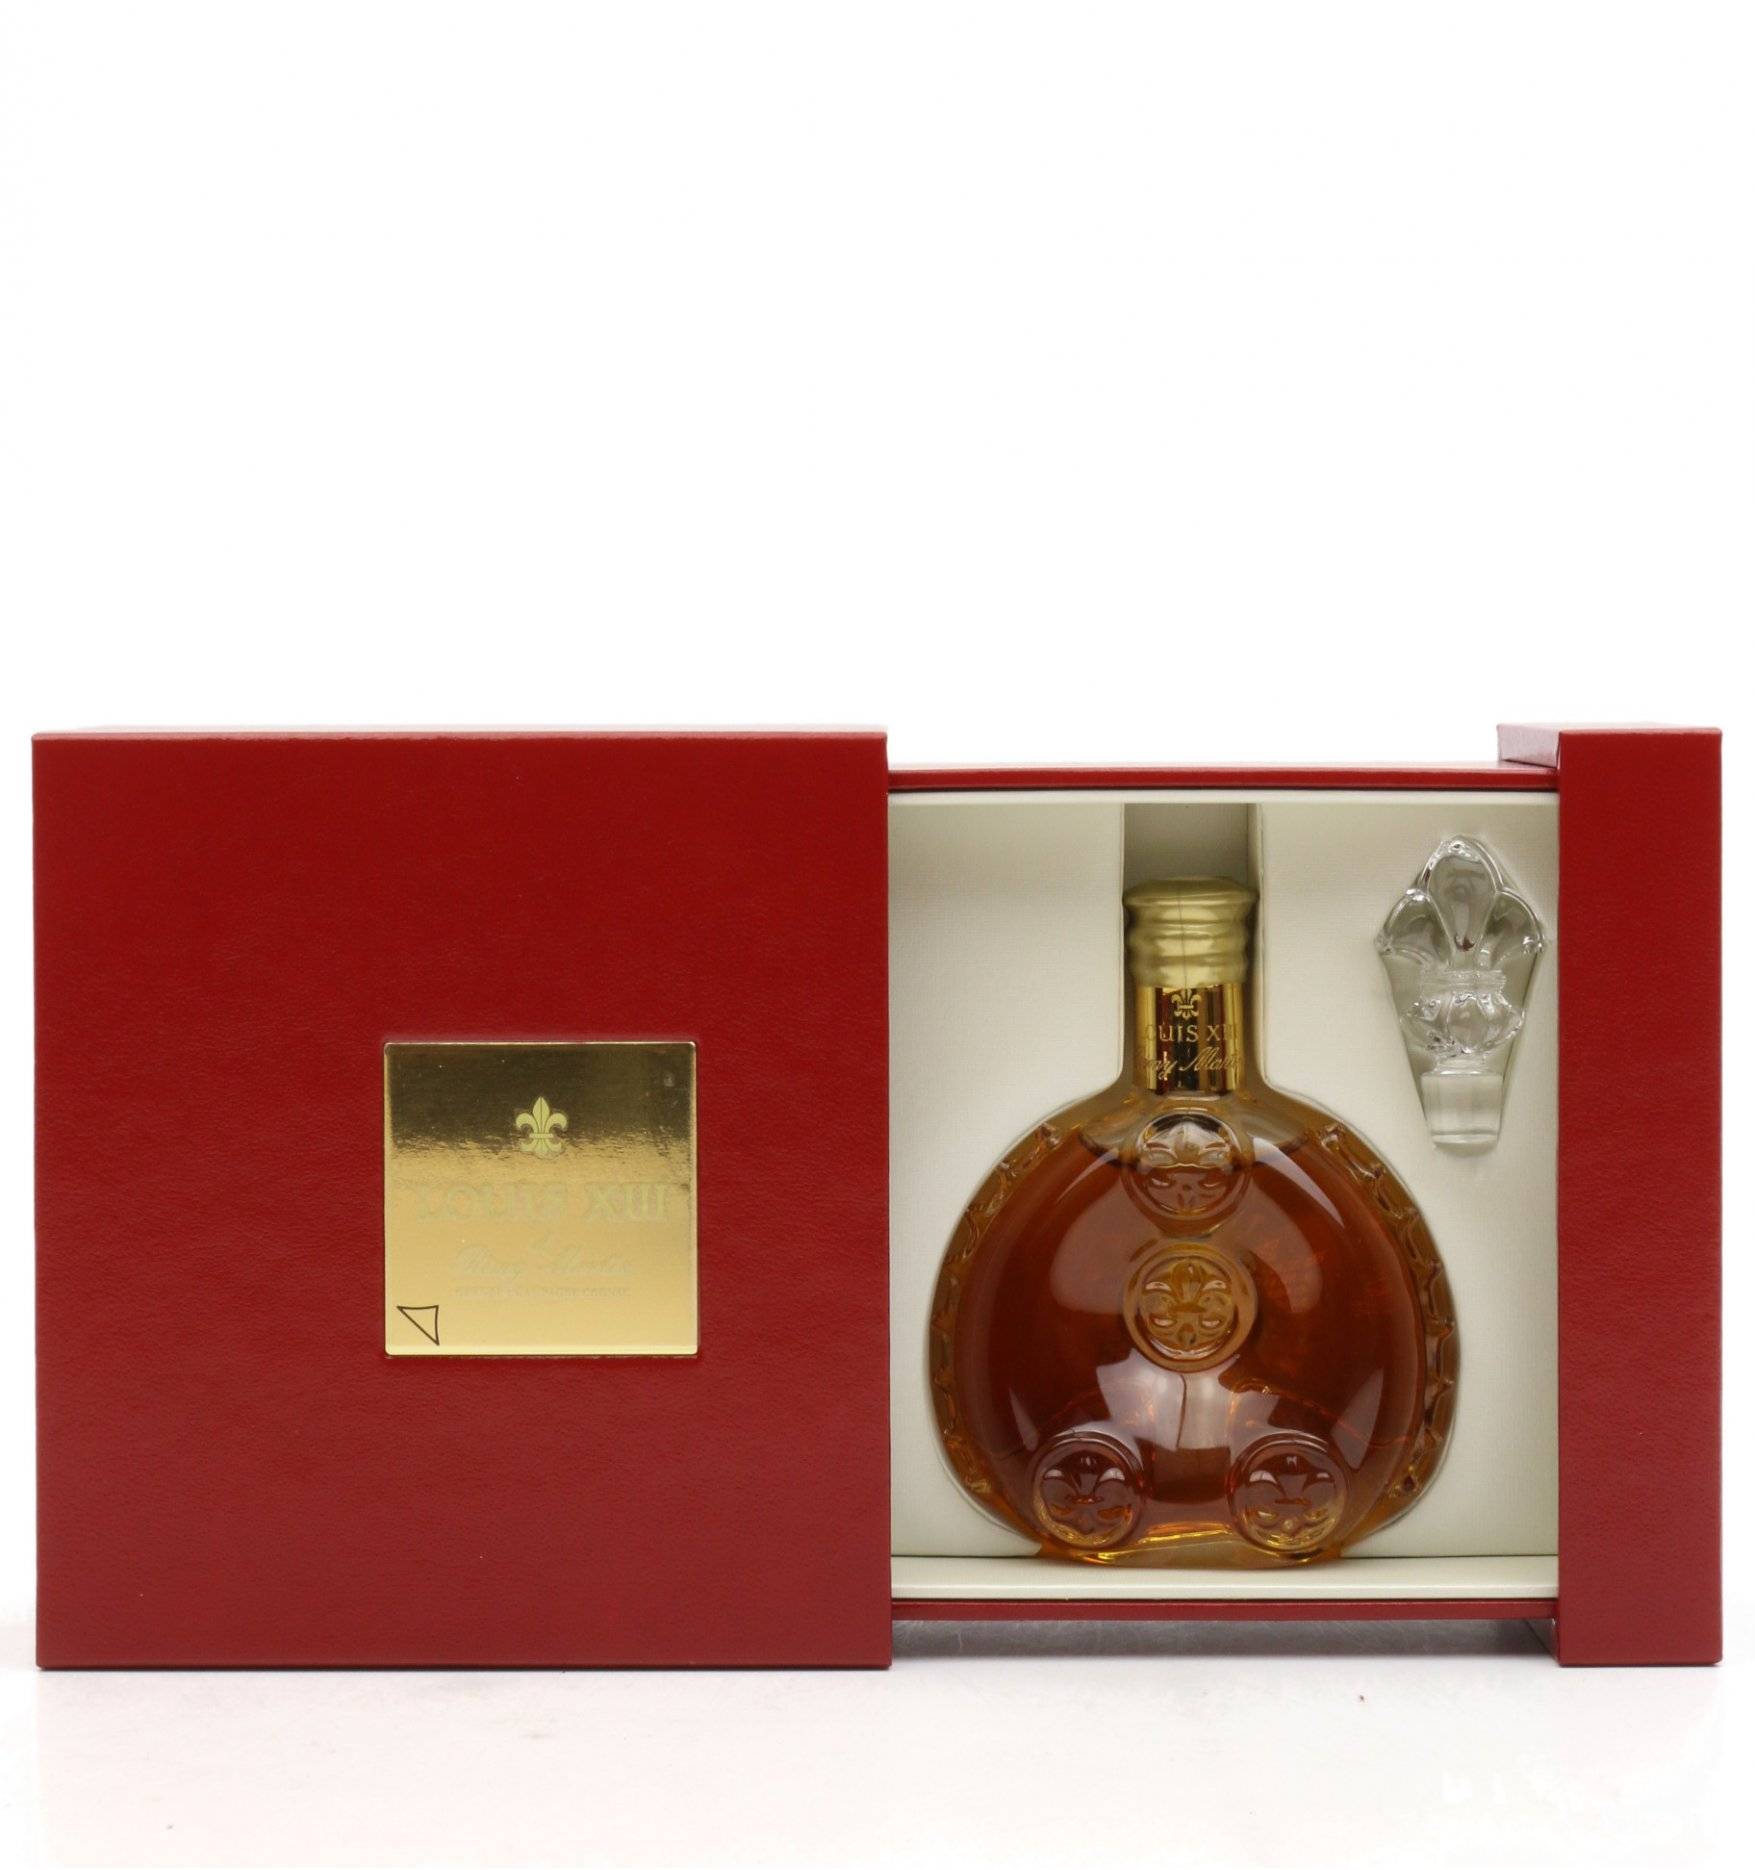 Louis XIII Cognac Miniature 50ml